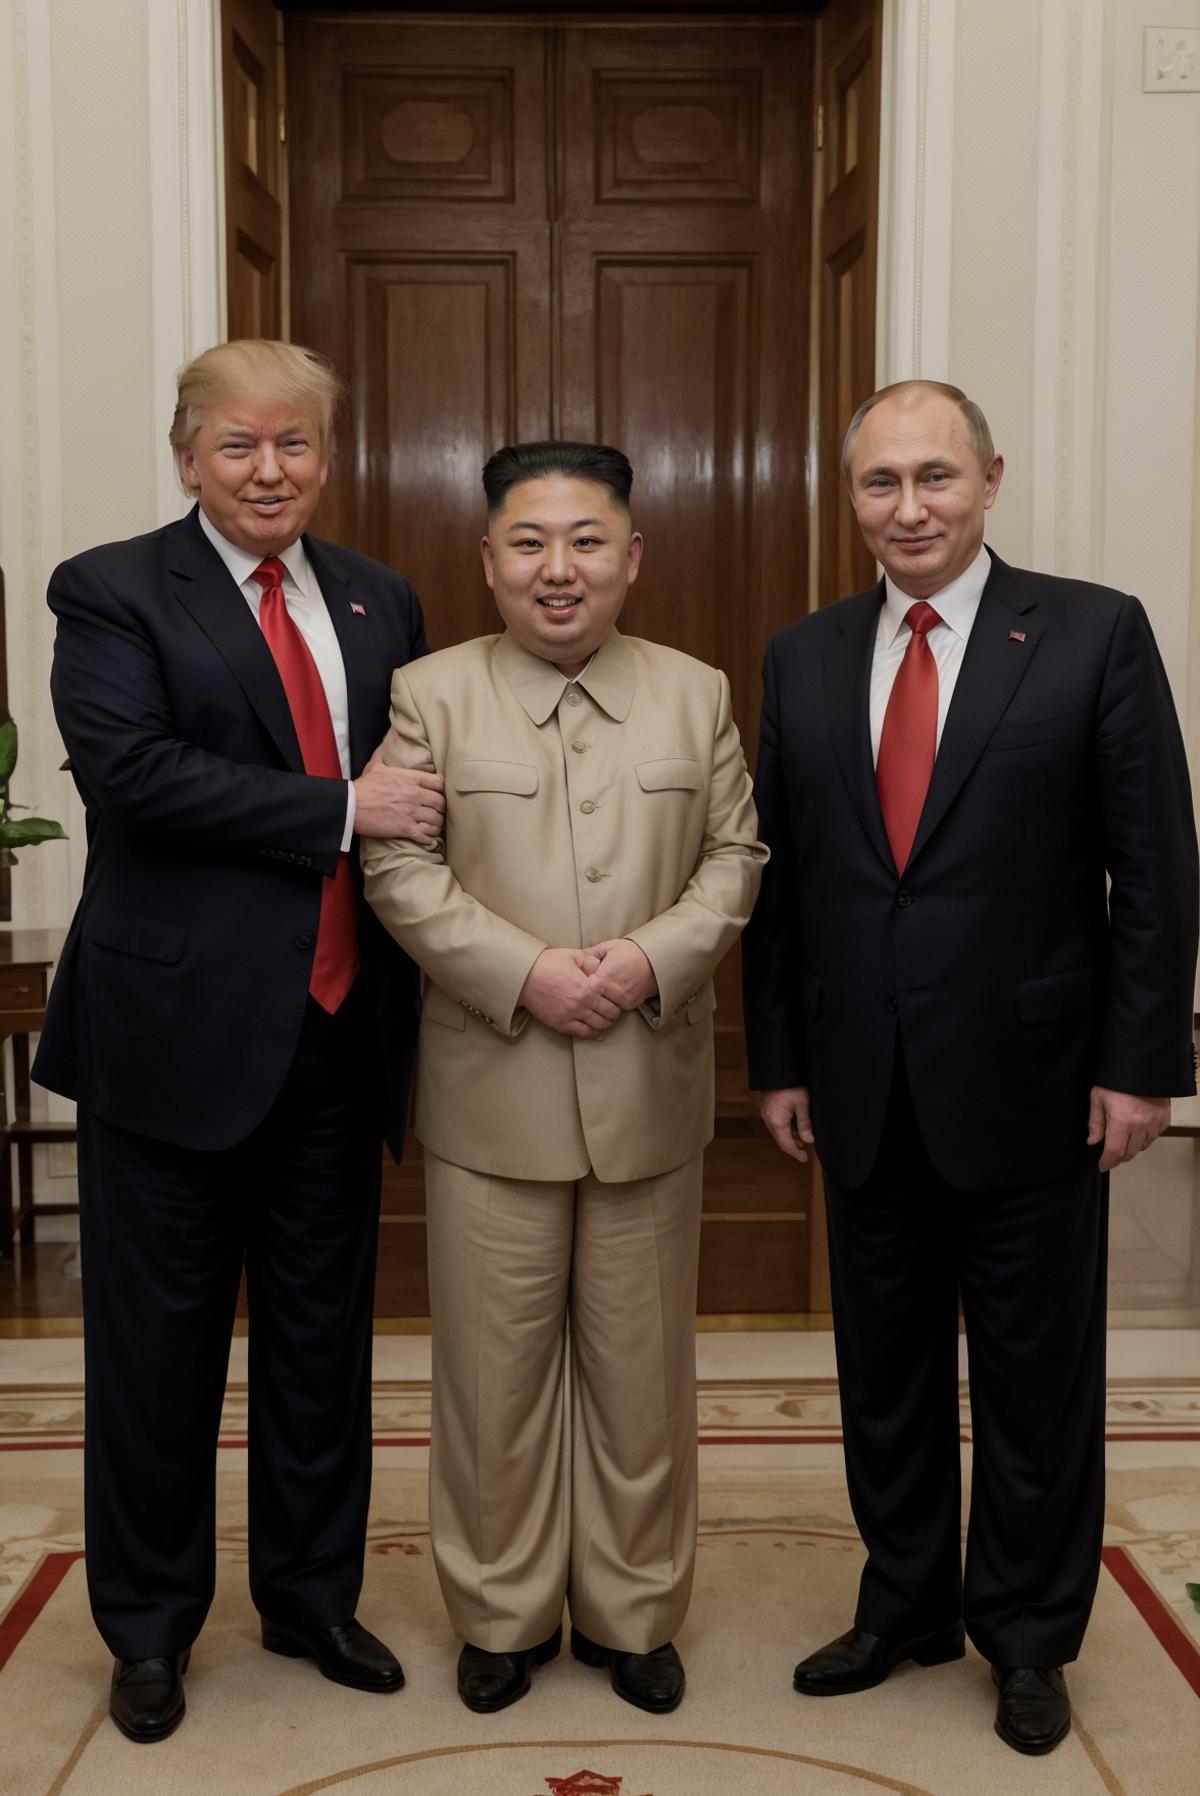 Three Men Standing Together: Trump, Kim Jong-un, and Putin